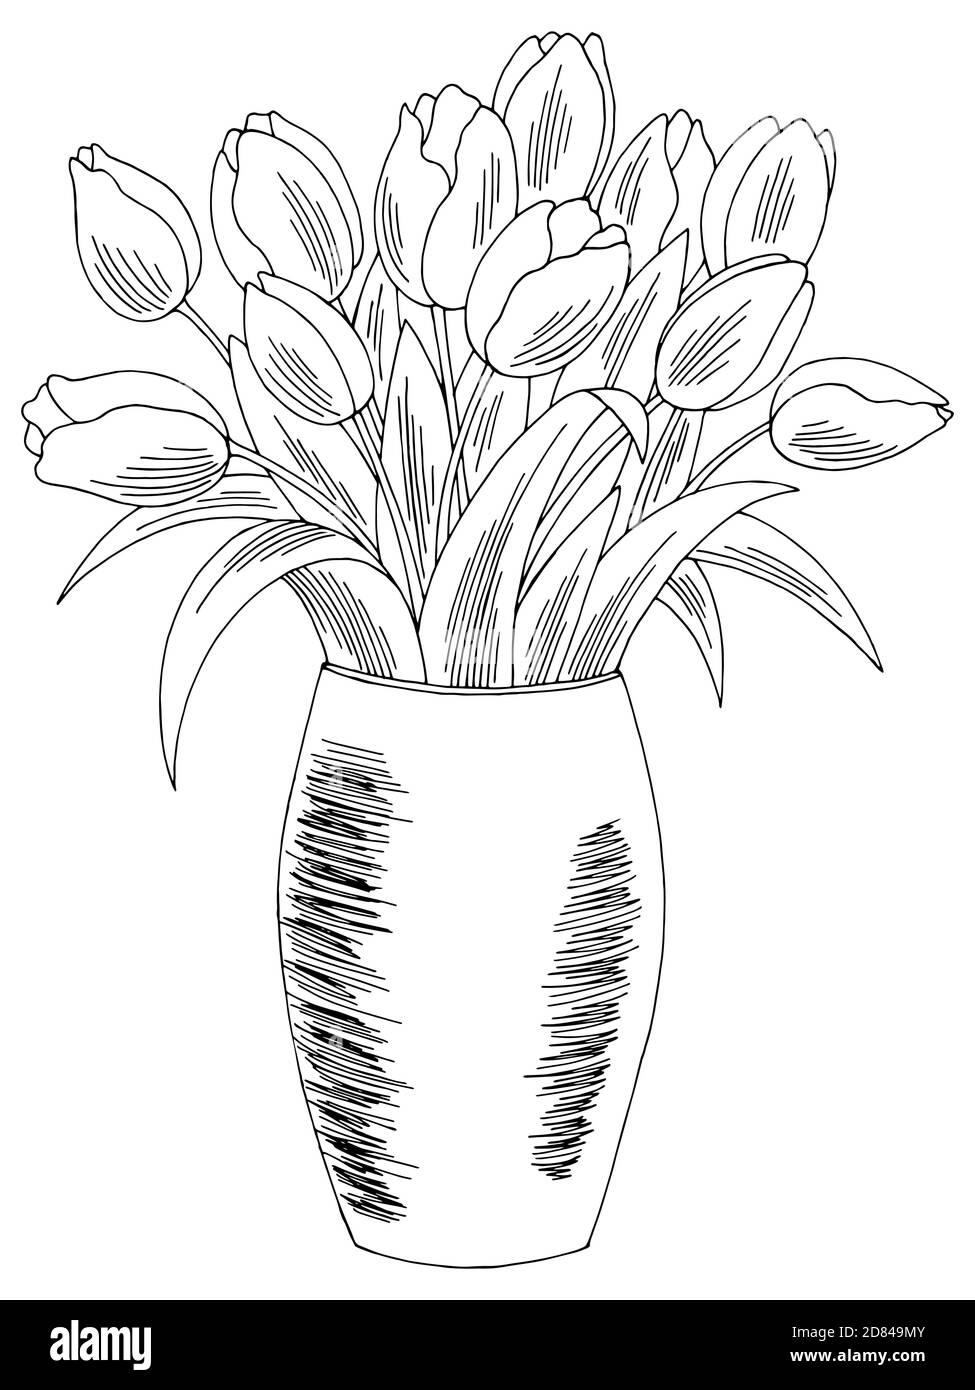 Page 2 | Flower Vase Drawing Designs Images - Free Download on Freepik-saigonsouth.com.vn